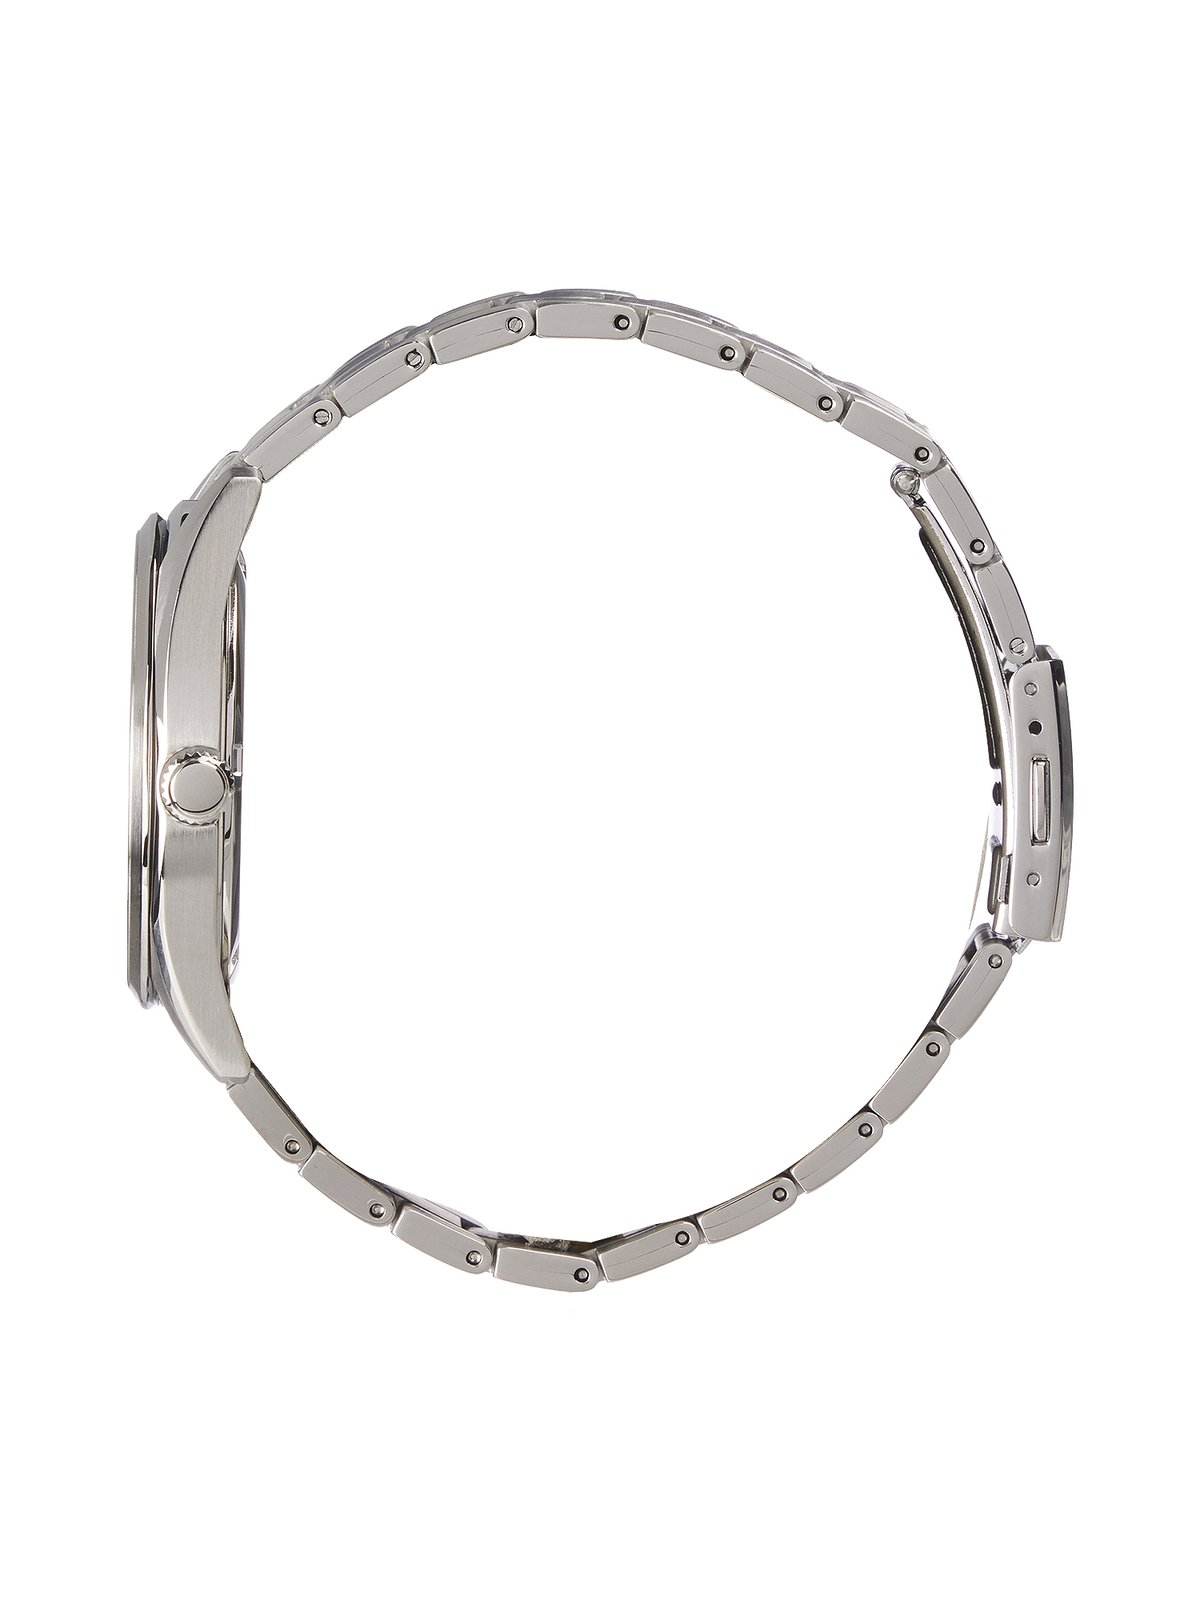 Mens Silver Classic Quartz | SUR341P1 Verishop Seiko Stainless-Steel Watch